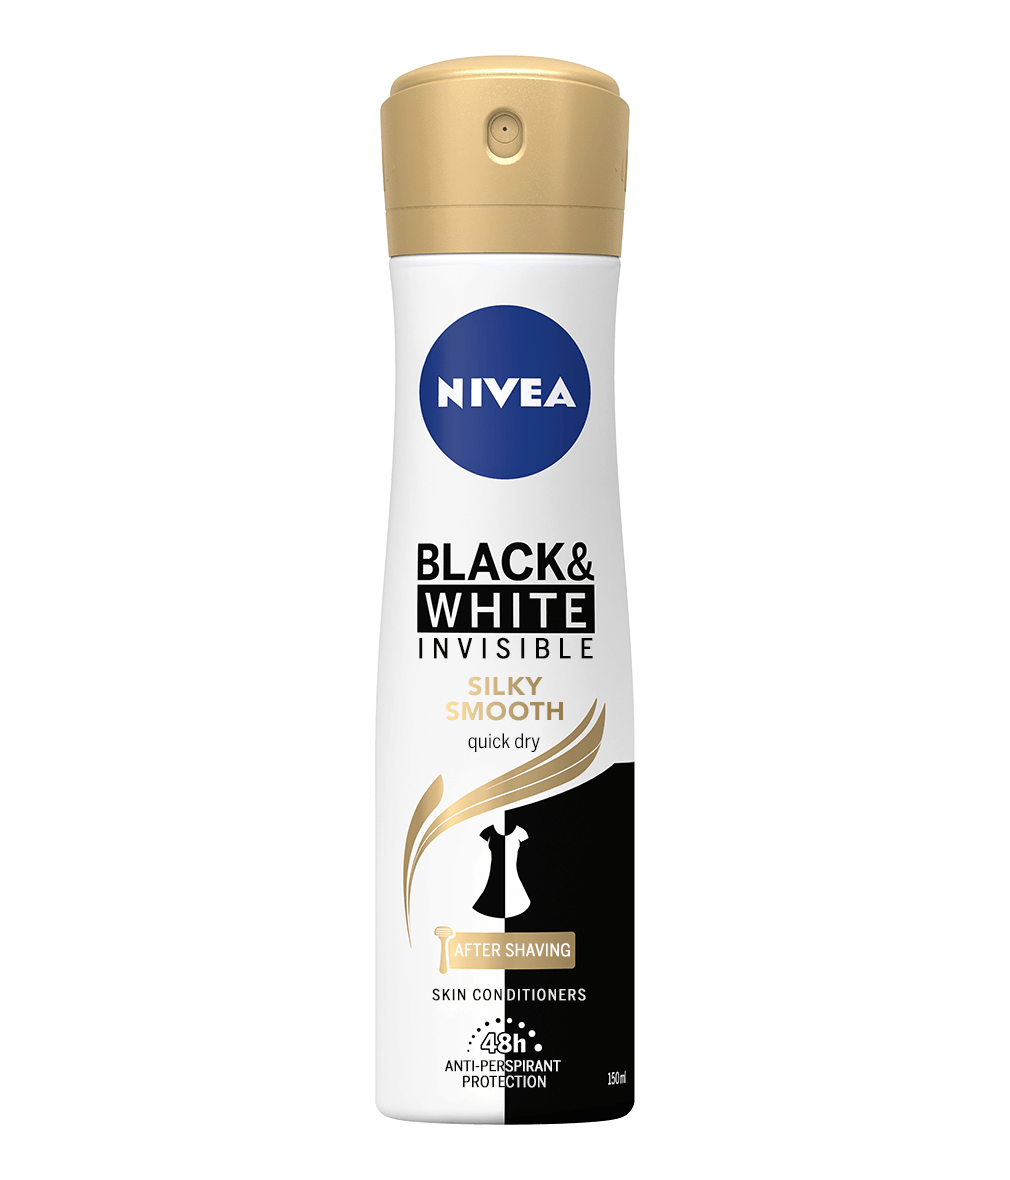 NIVEA Black & White Silky Smooth Dry Spray NIVEA Canada